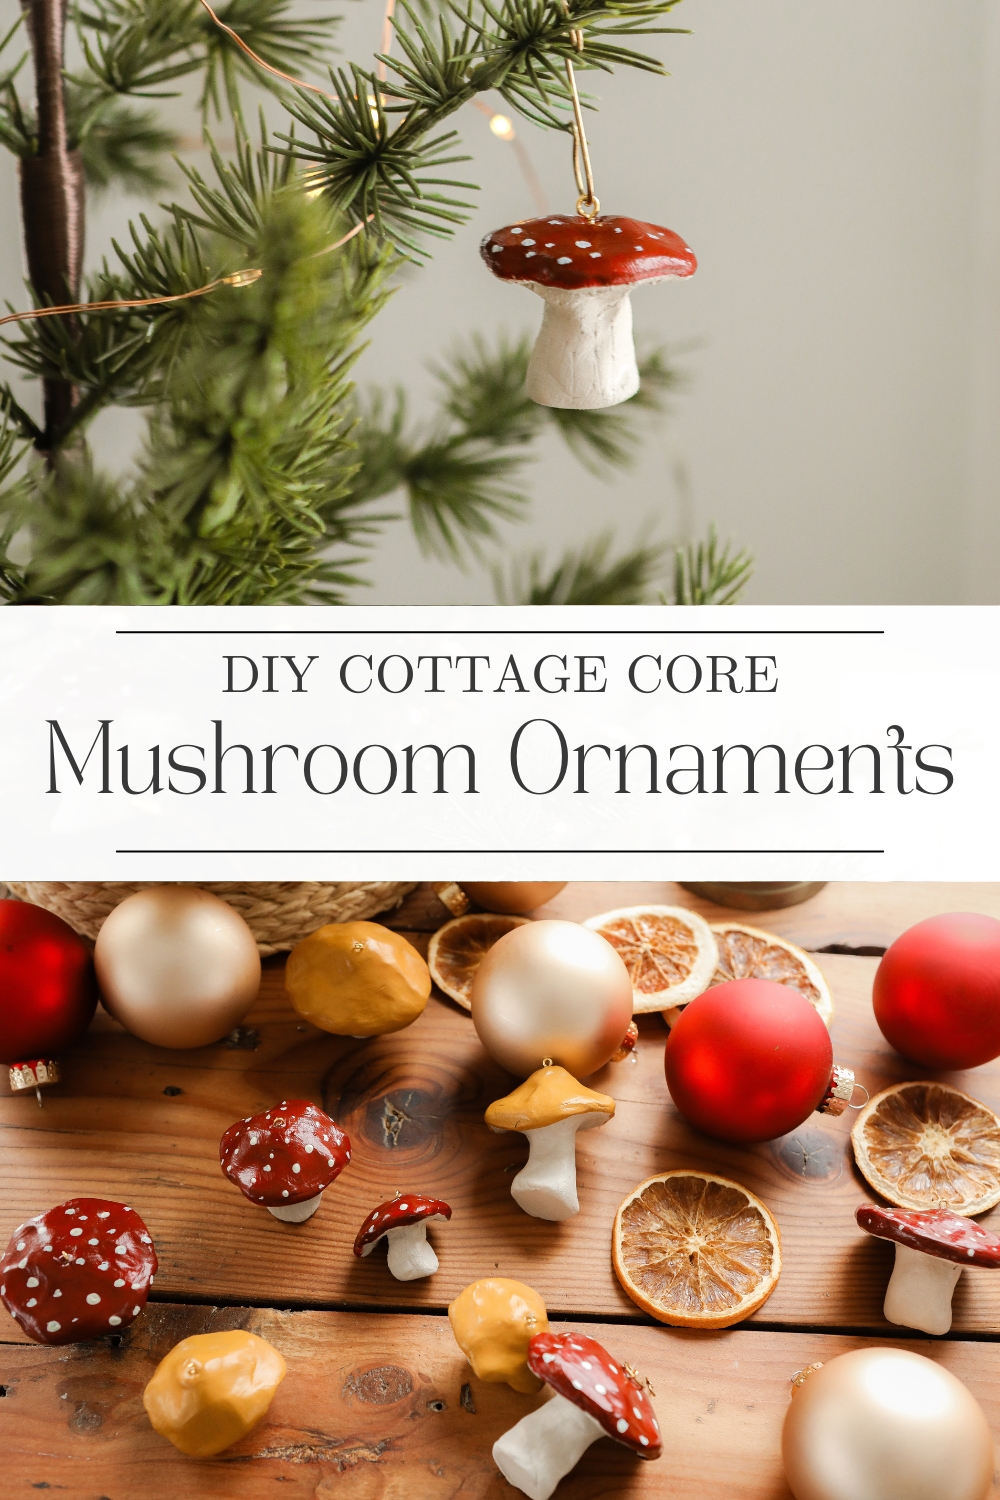 DIY oven baked clay mushroom ornaments